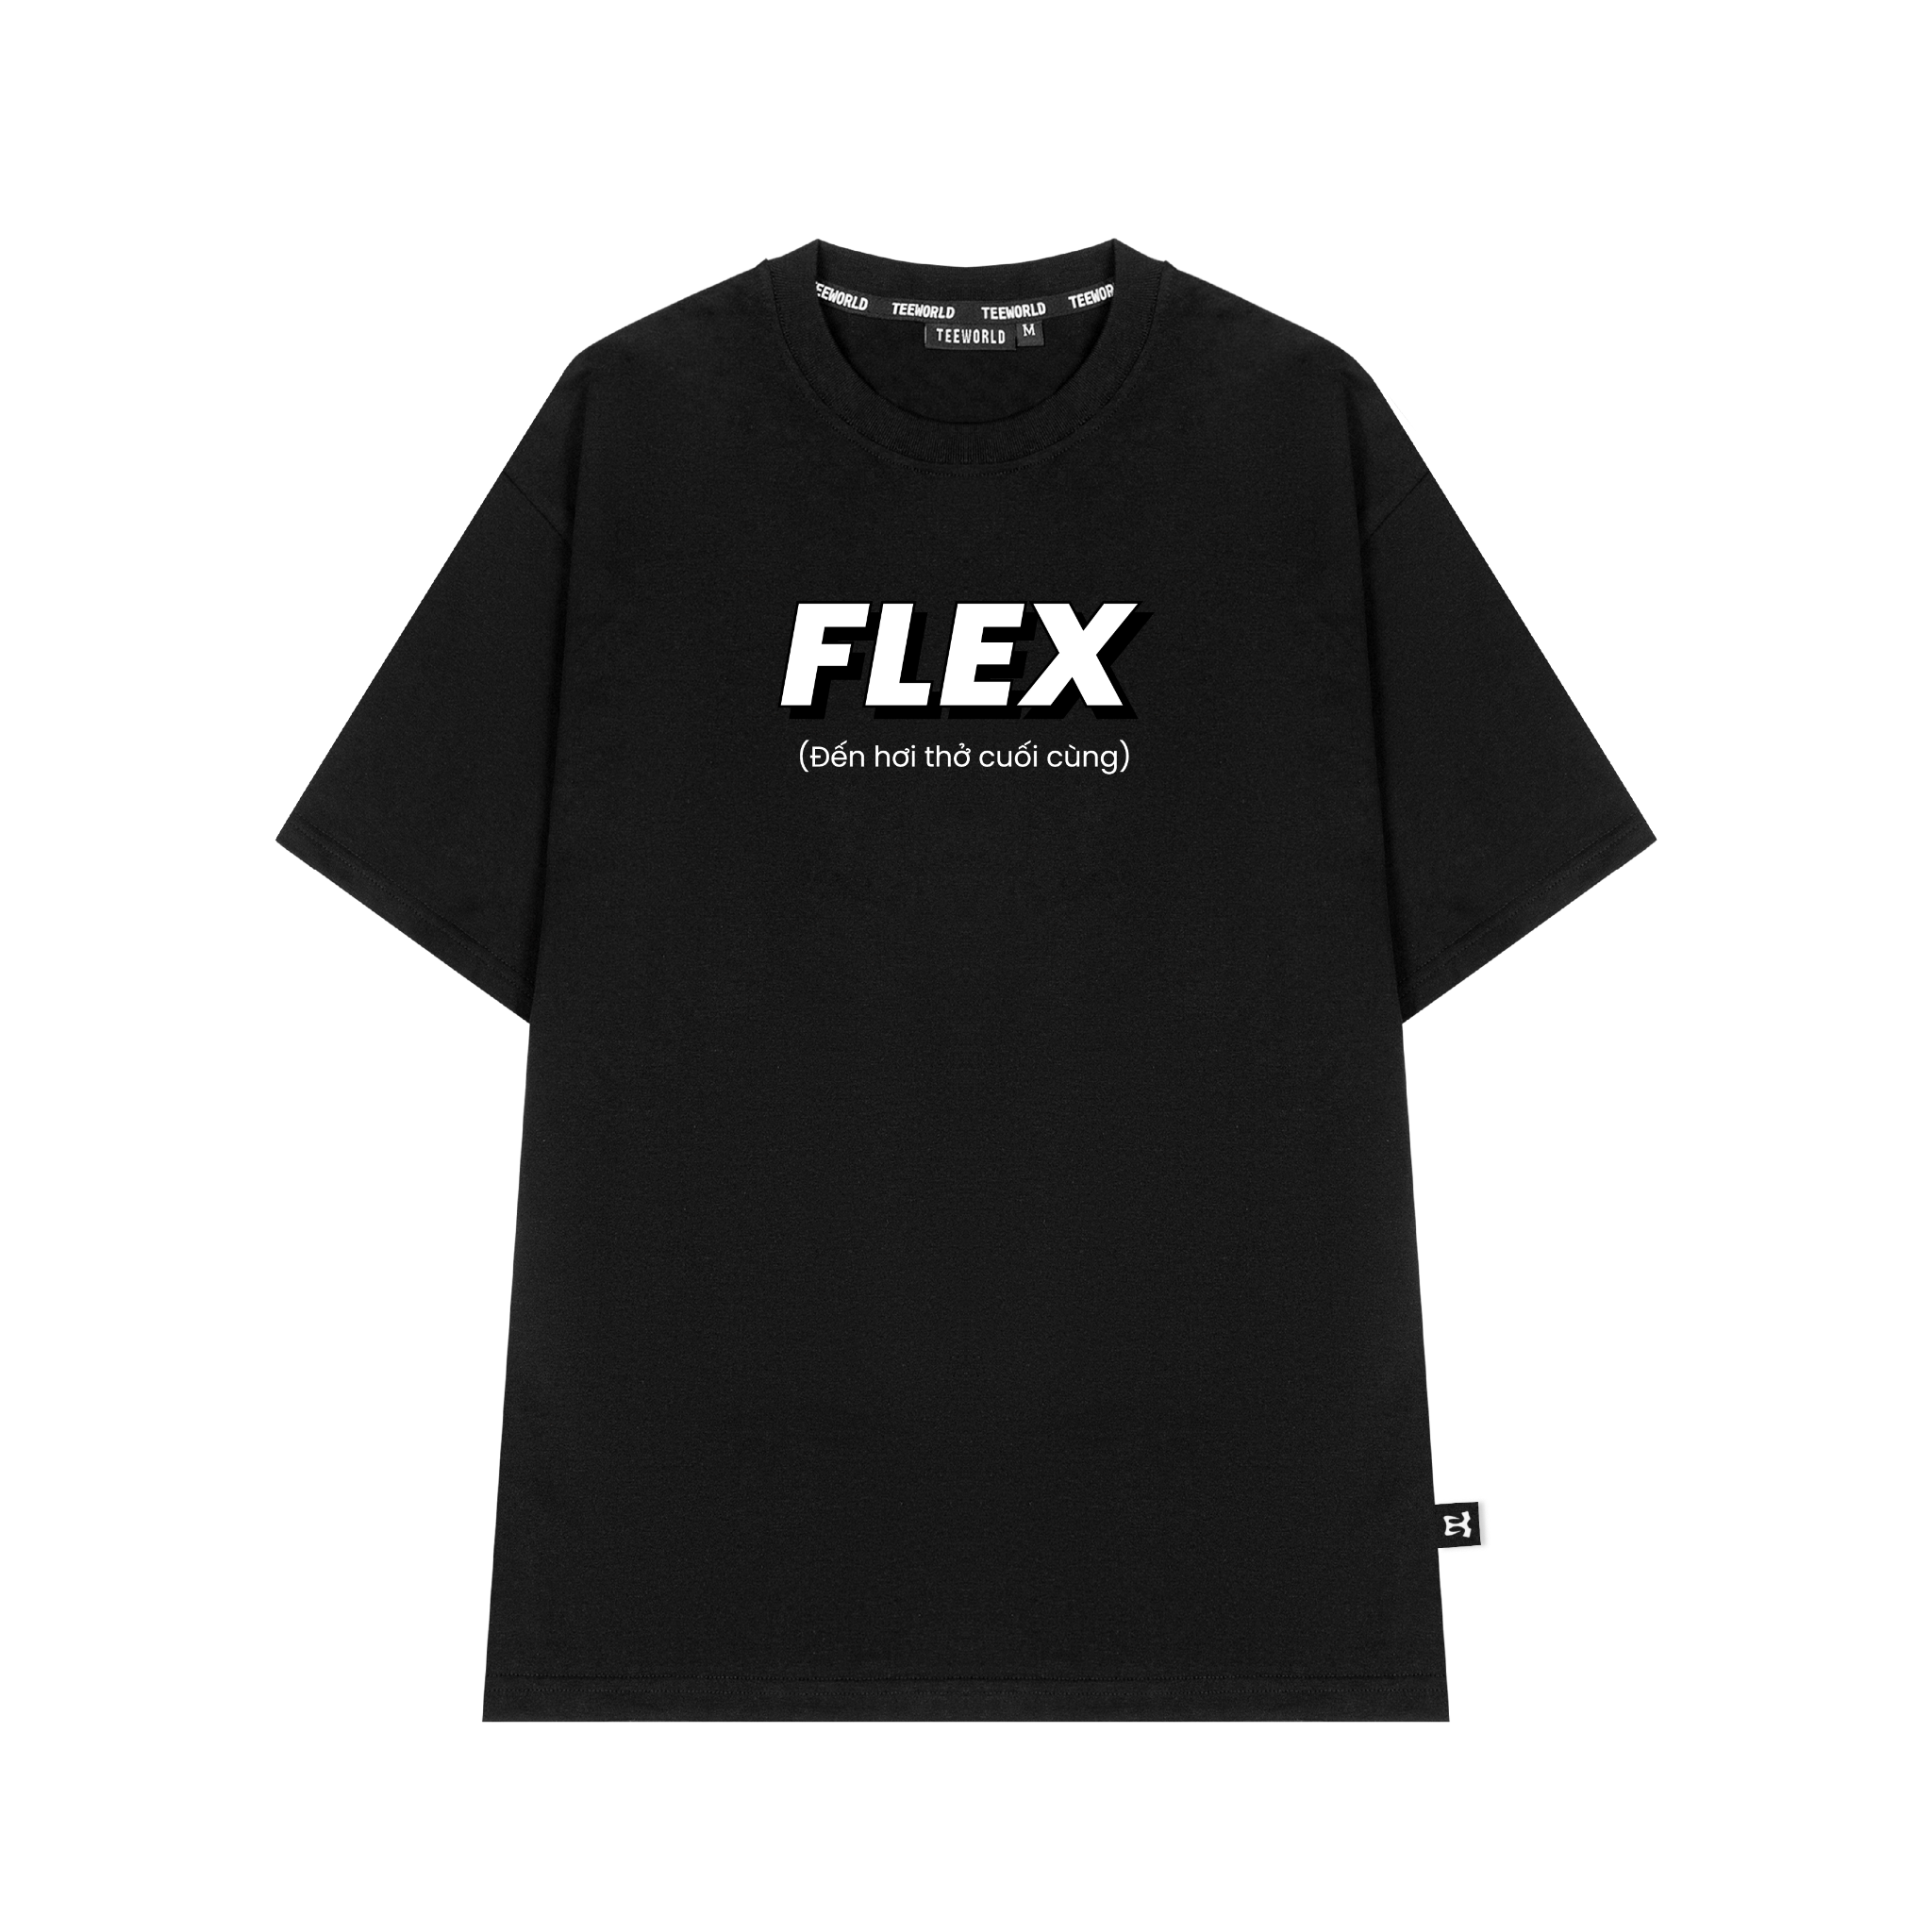  Áo thun Teeworld Flex T-shirt 